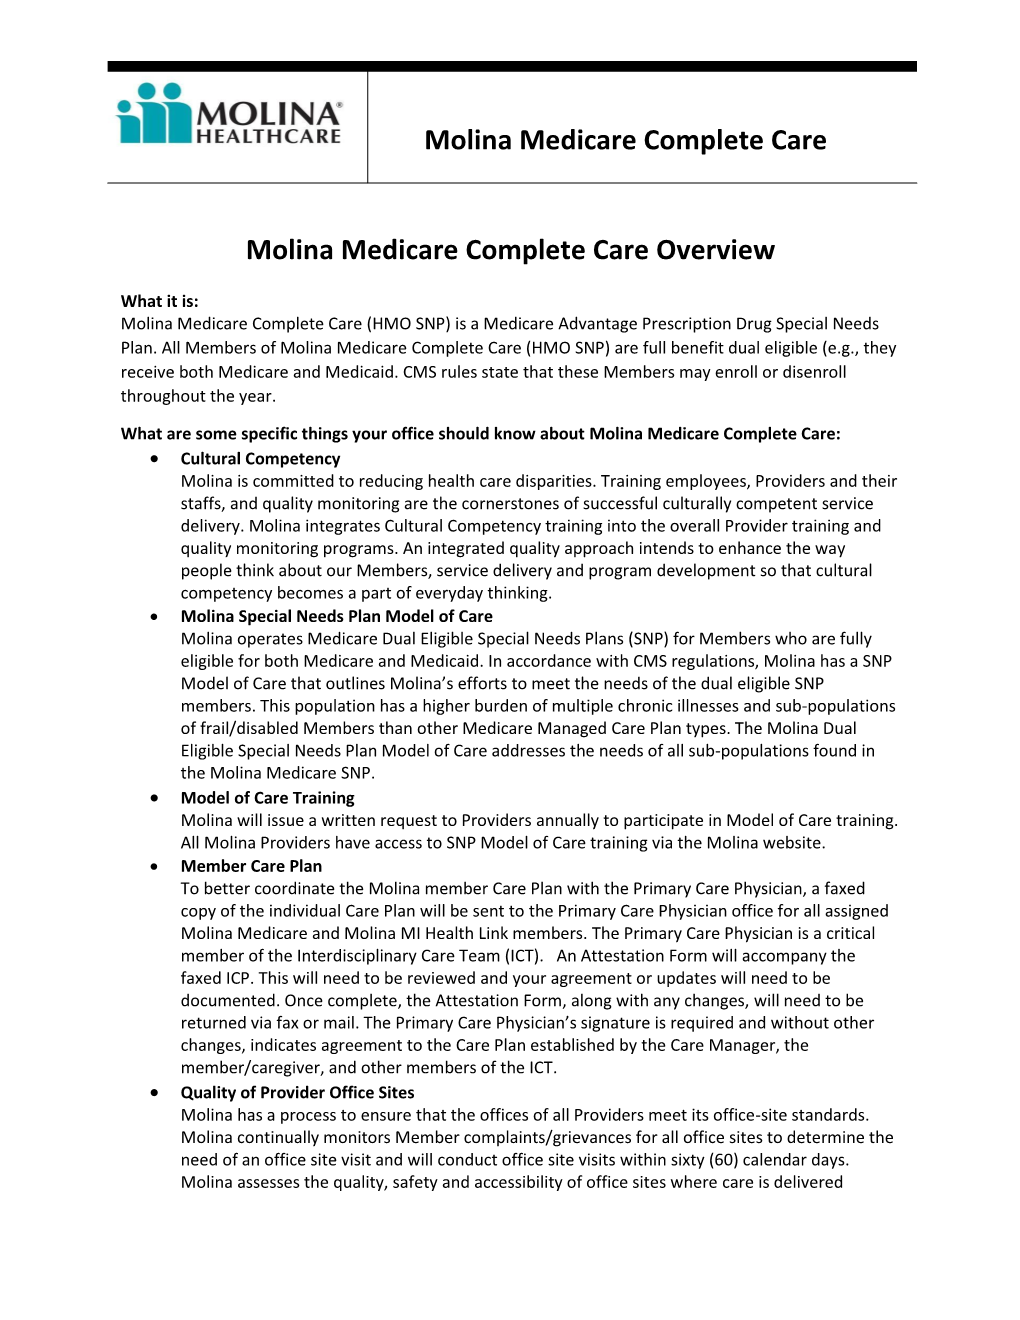 Molina-Medicare-Complete-Care